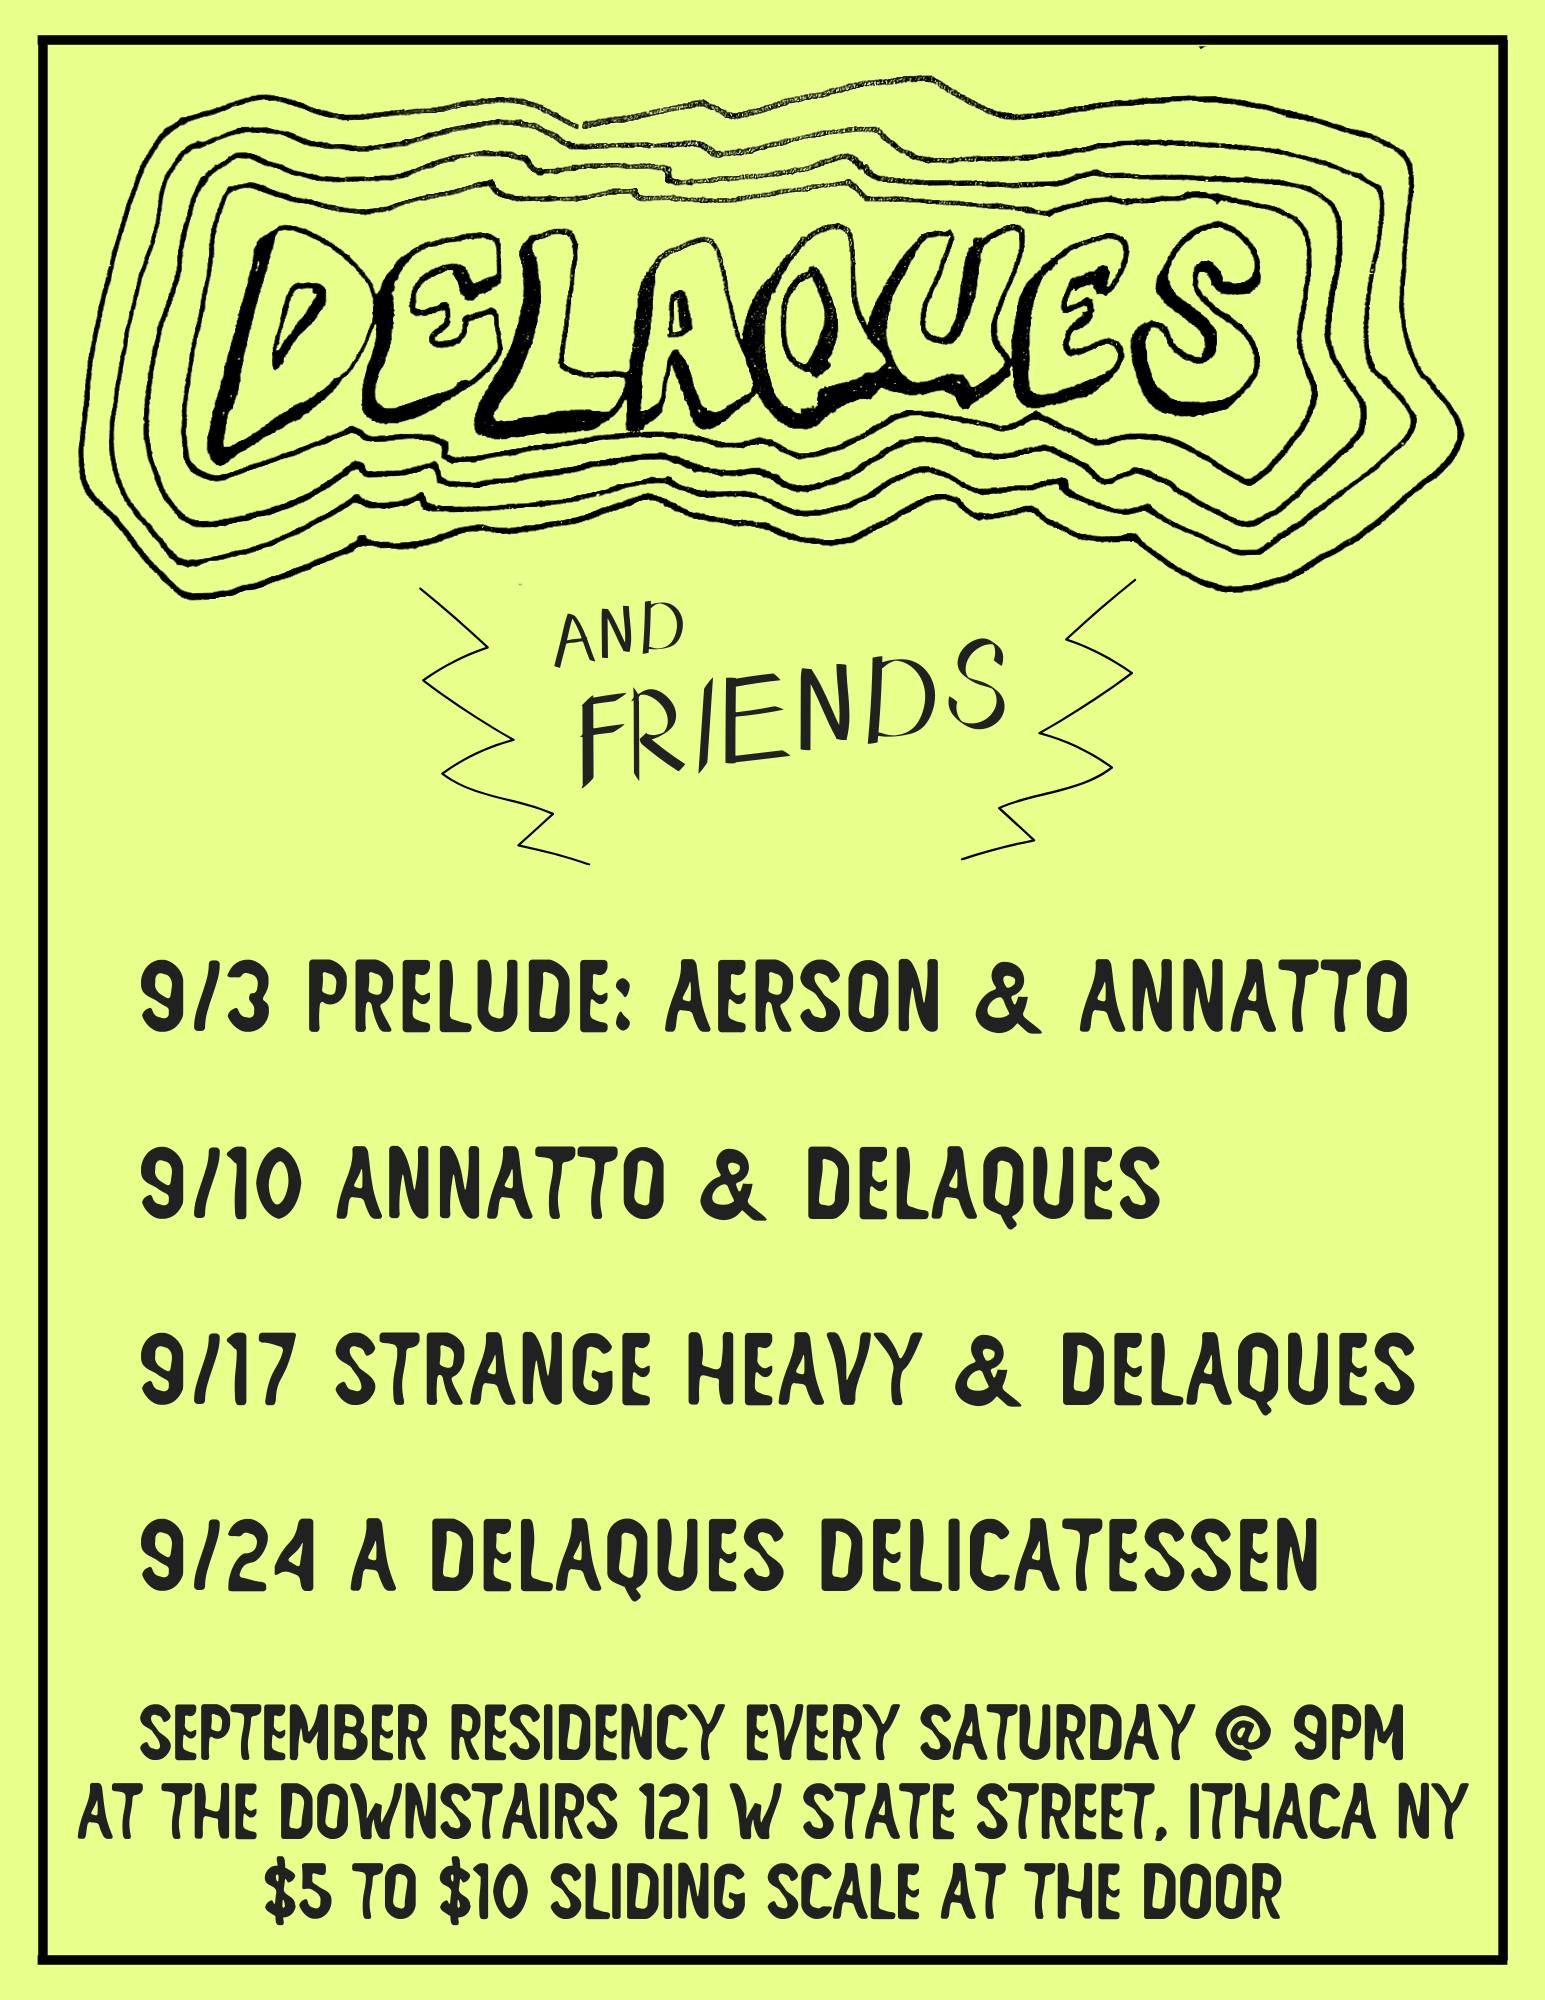 Delaques & Friends September Residency